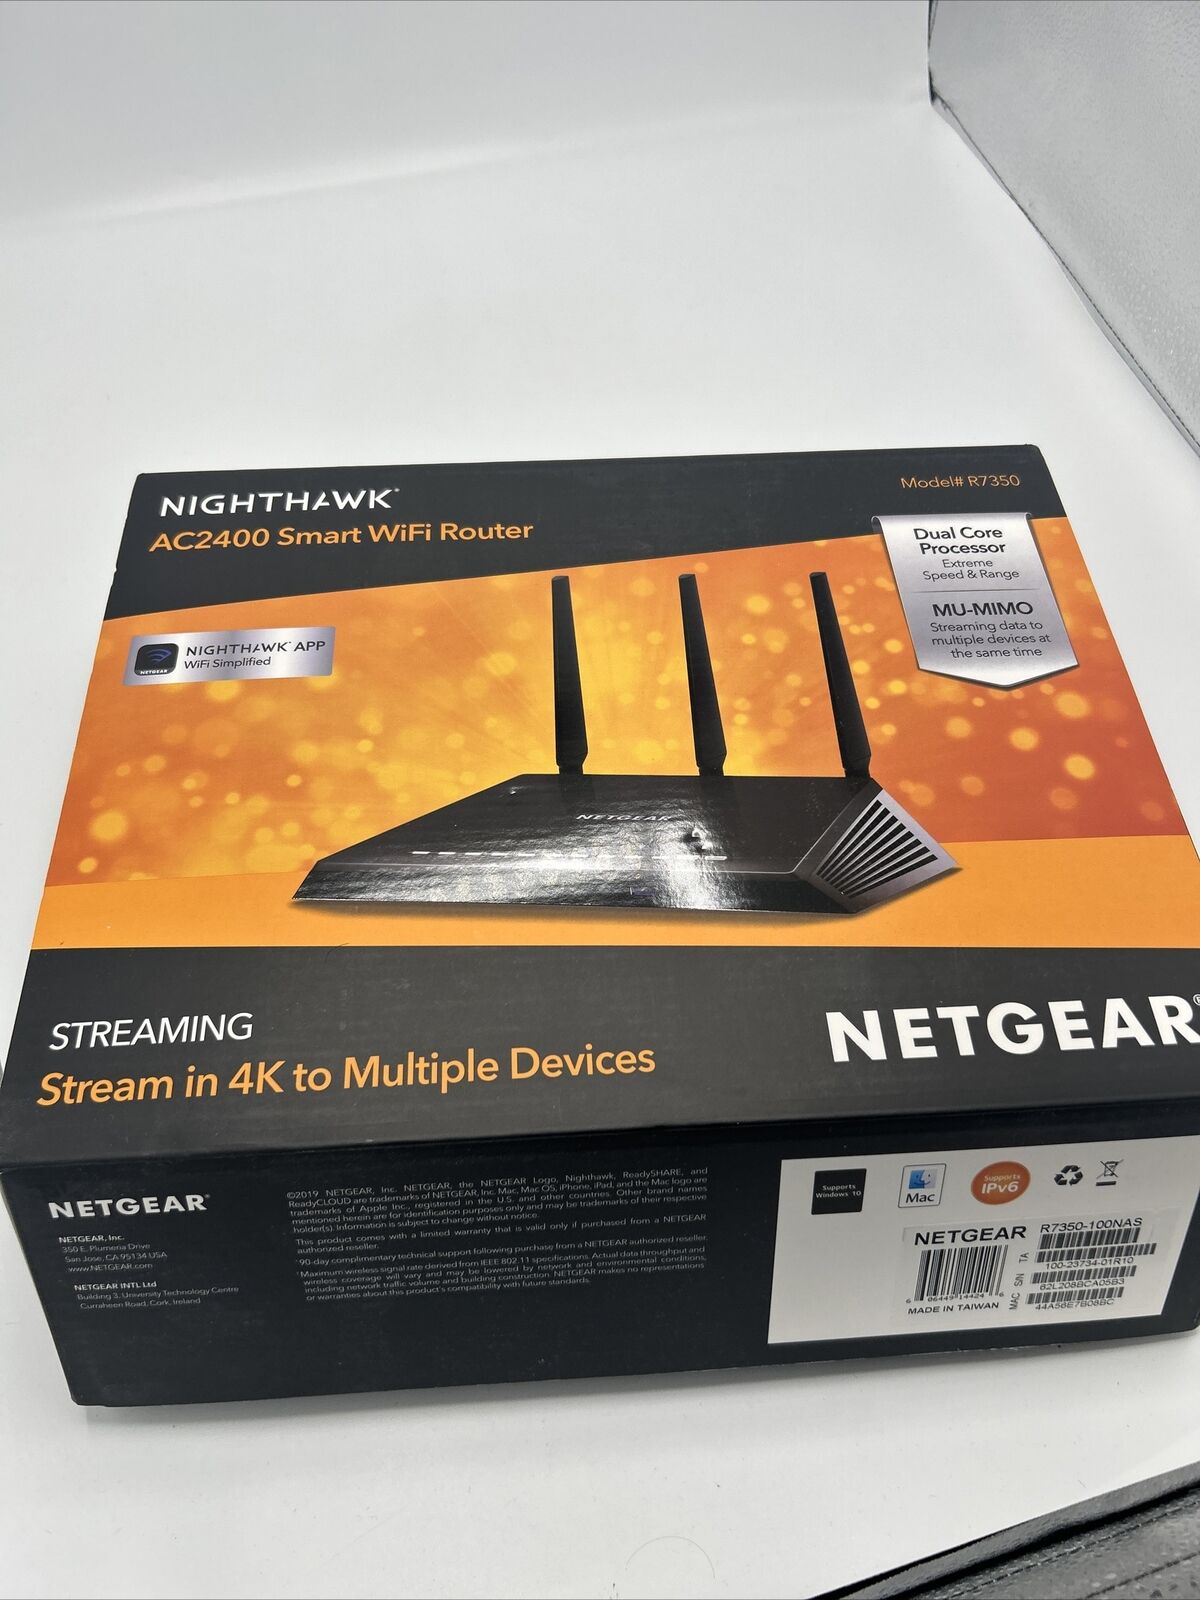 NETGEAR Nighthawk R7350 2400 Mbps 4-Port Wireless Router